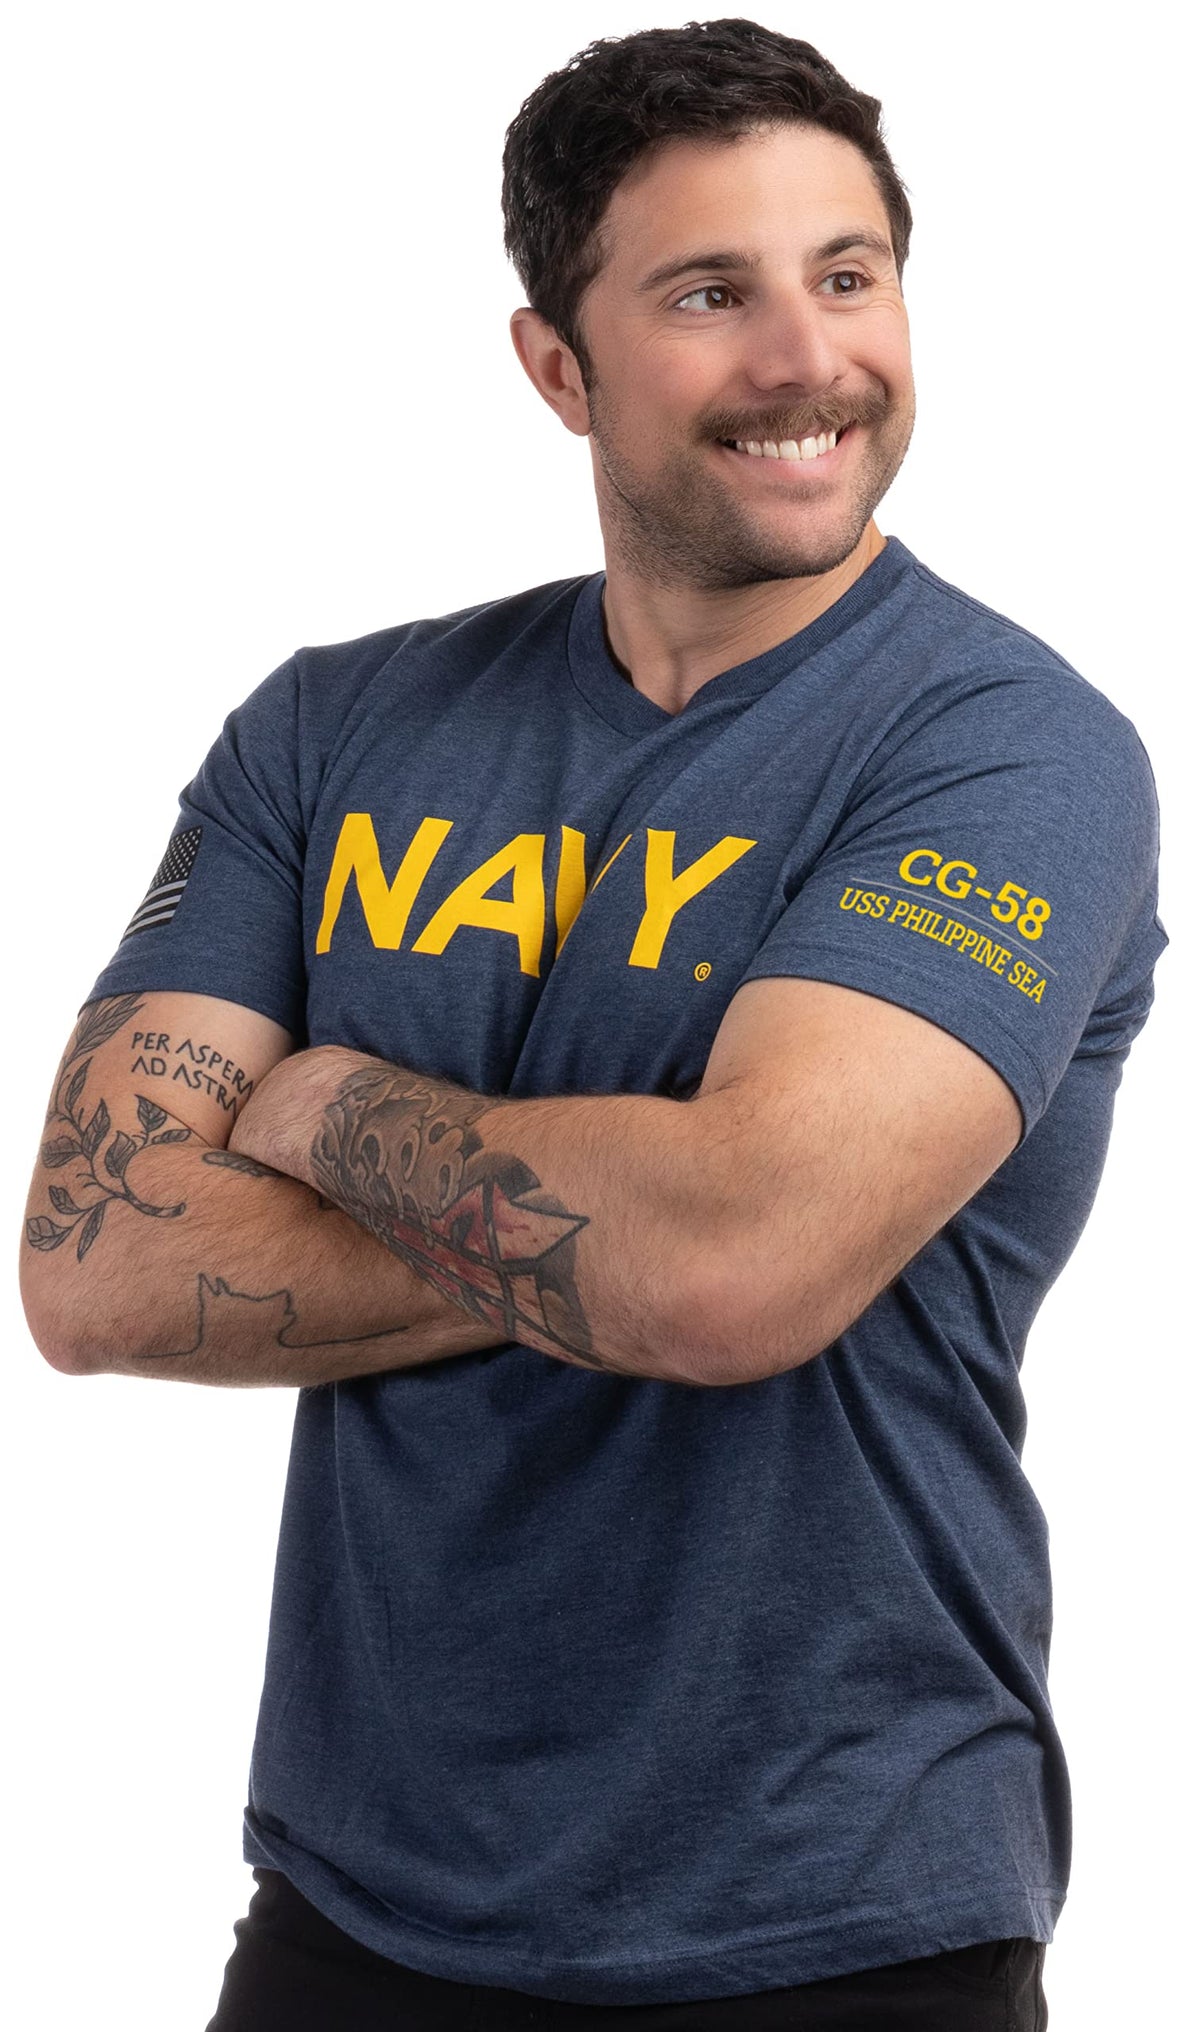 USS Philippine Sea, CG-58 | U.S. Navy Sailor Veteran USN United States Naval T-shirt for Men Women